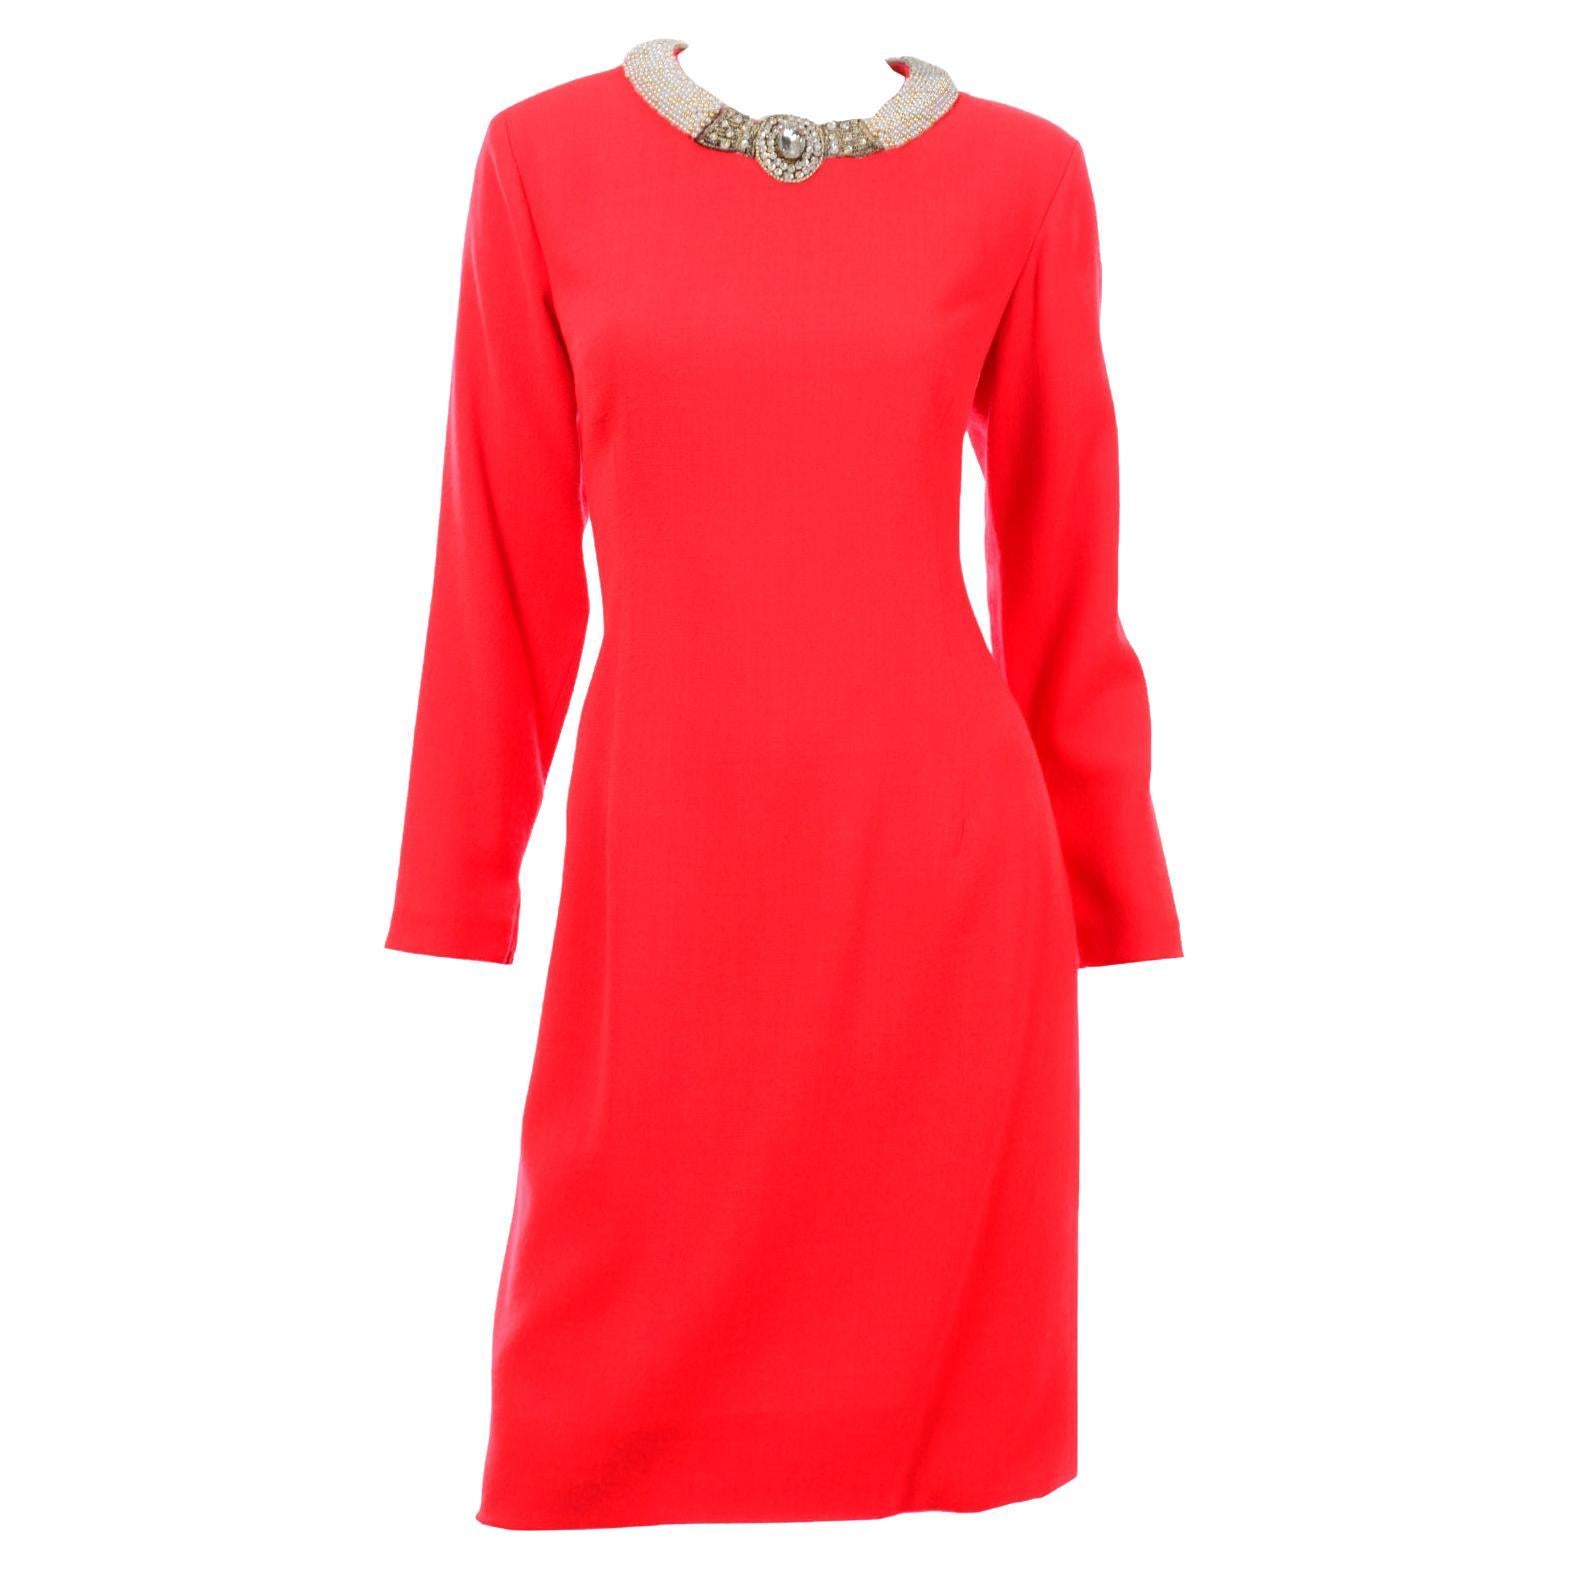 Vintage Travilla Red Dress w Statement Jeweled Rhinestone & Pearl Collar For Sale